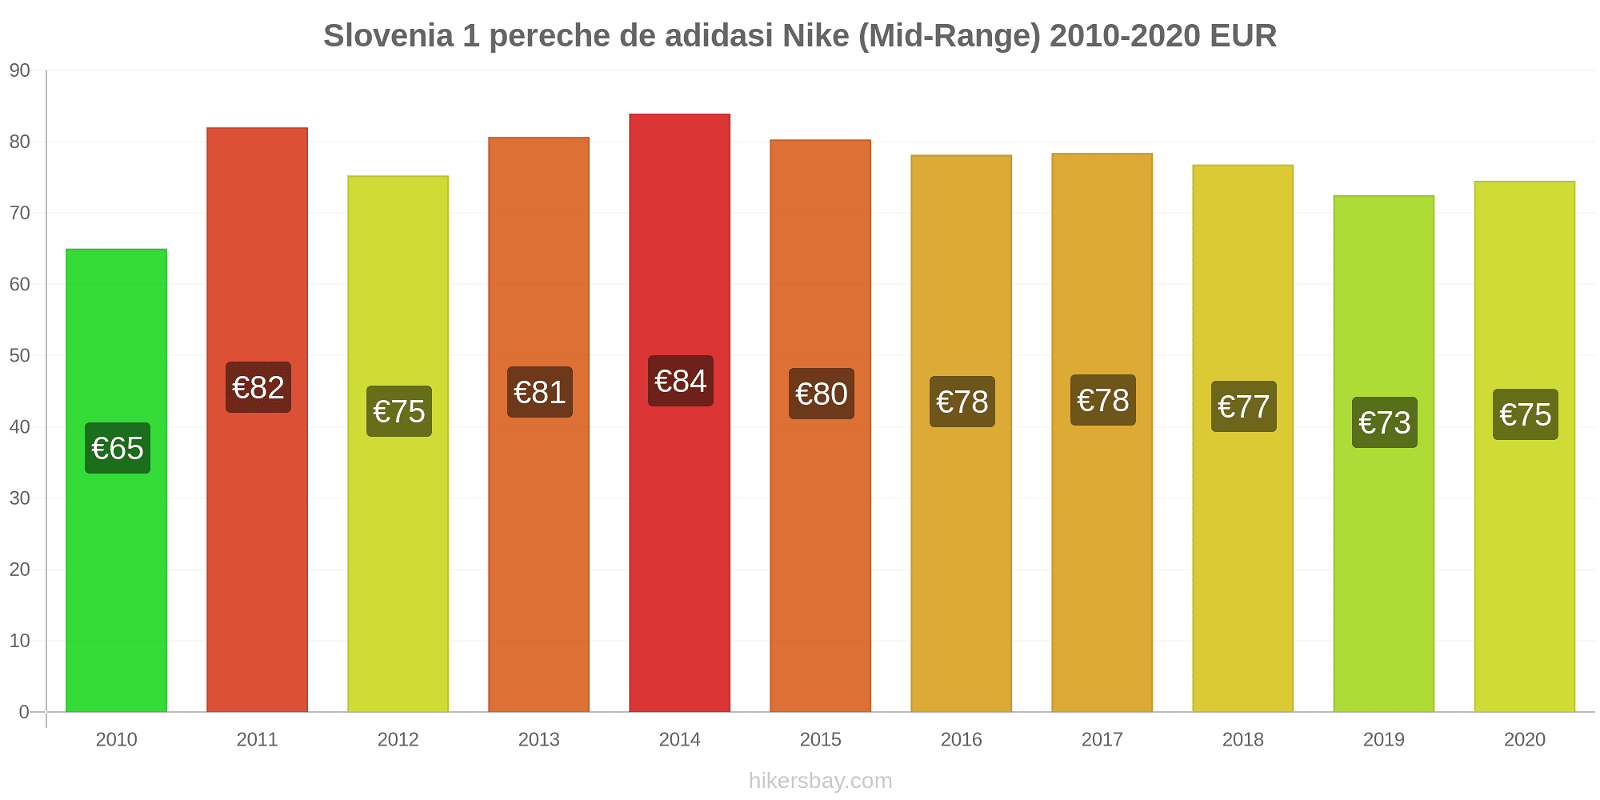 Slovenia modificări de preț 1 pereche de adidasi Nike (Mid-Range) hikersbay.com